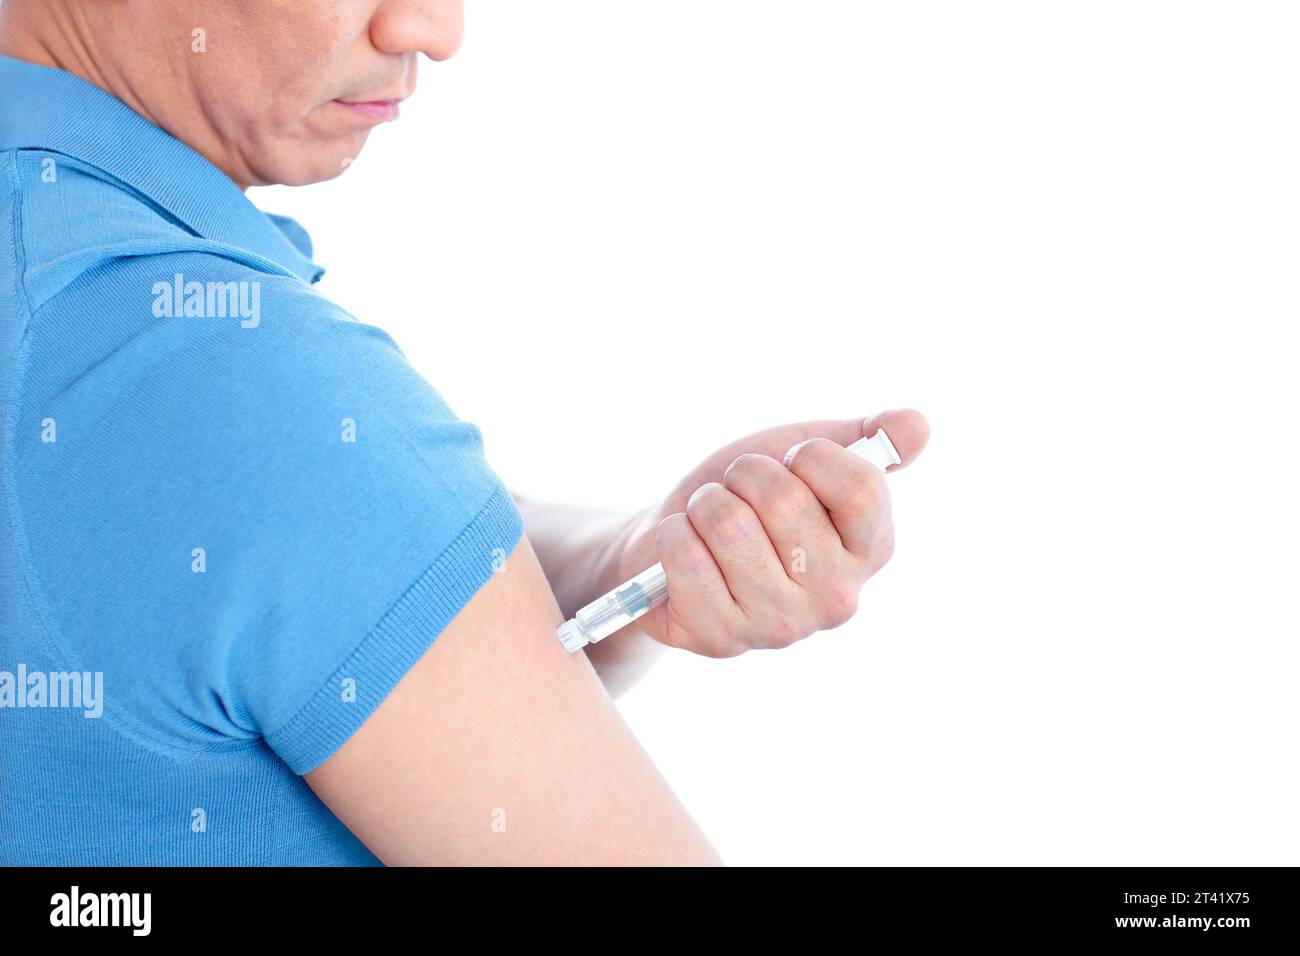 Man self-injecting Stock Photo